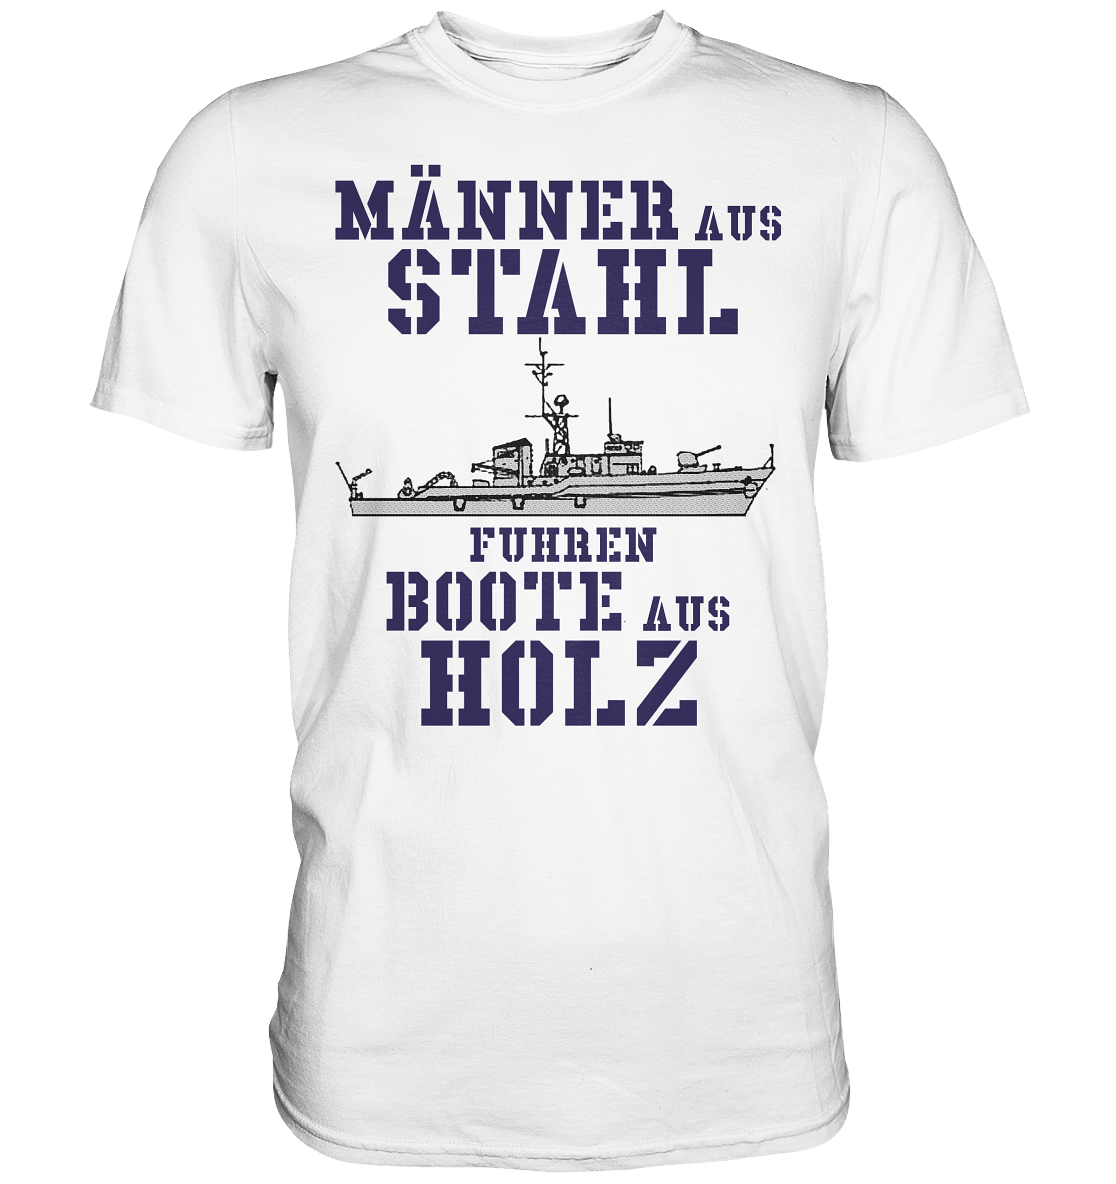 Männer aus Stahl...  KM-Boot Lindau-Klasse - Premium Shirt